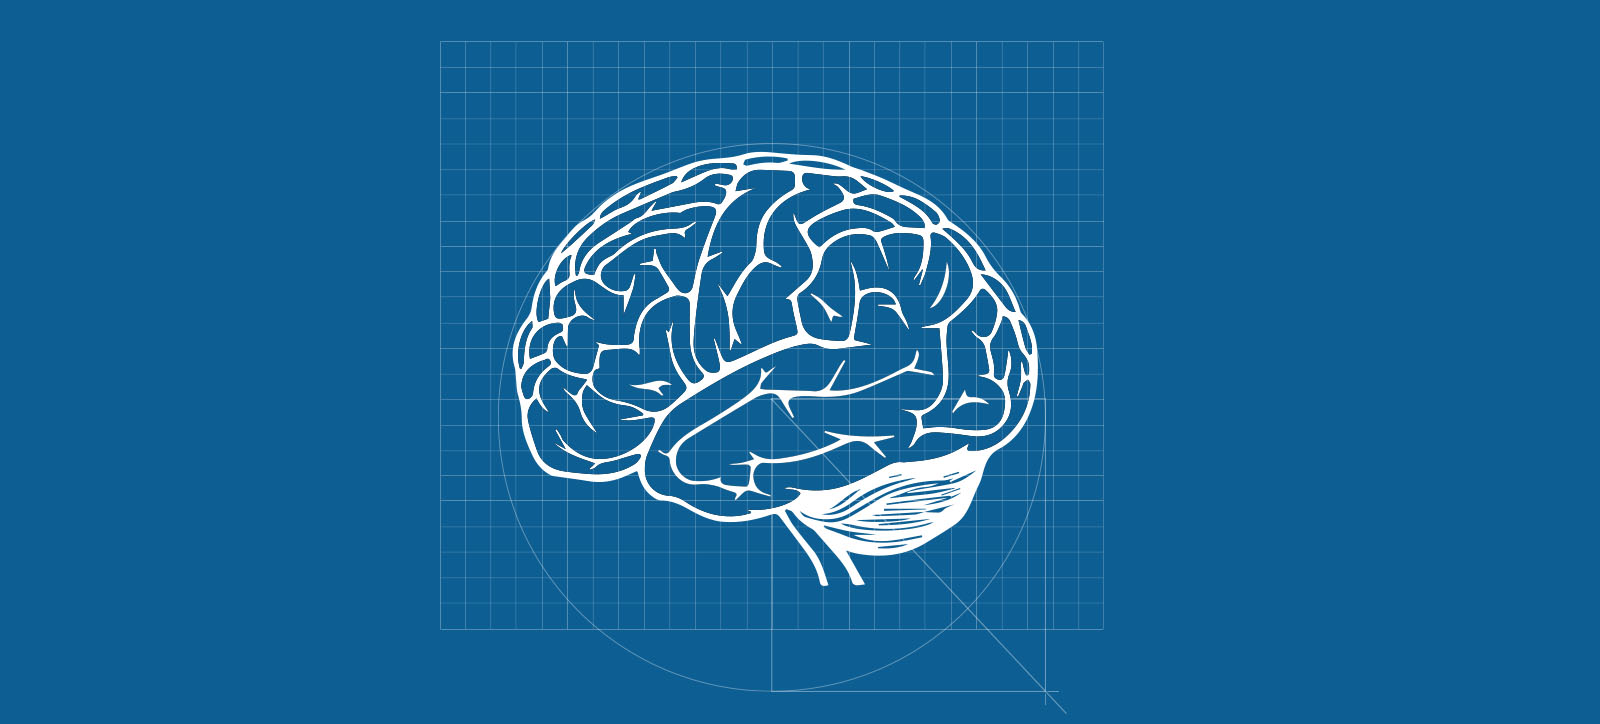 A brain depicting design thinking